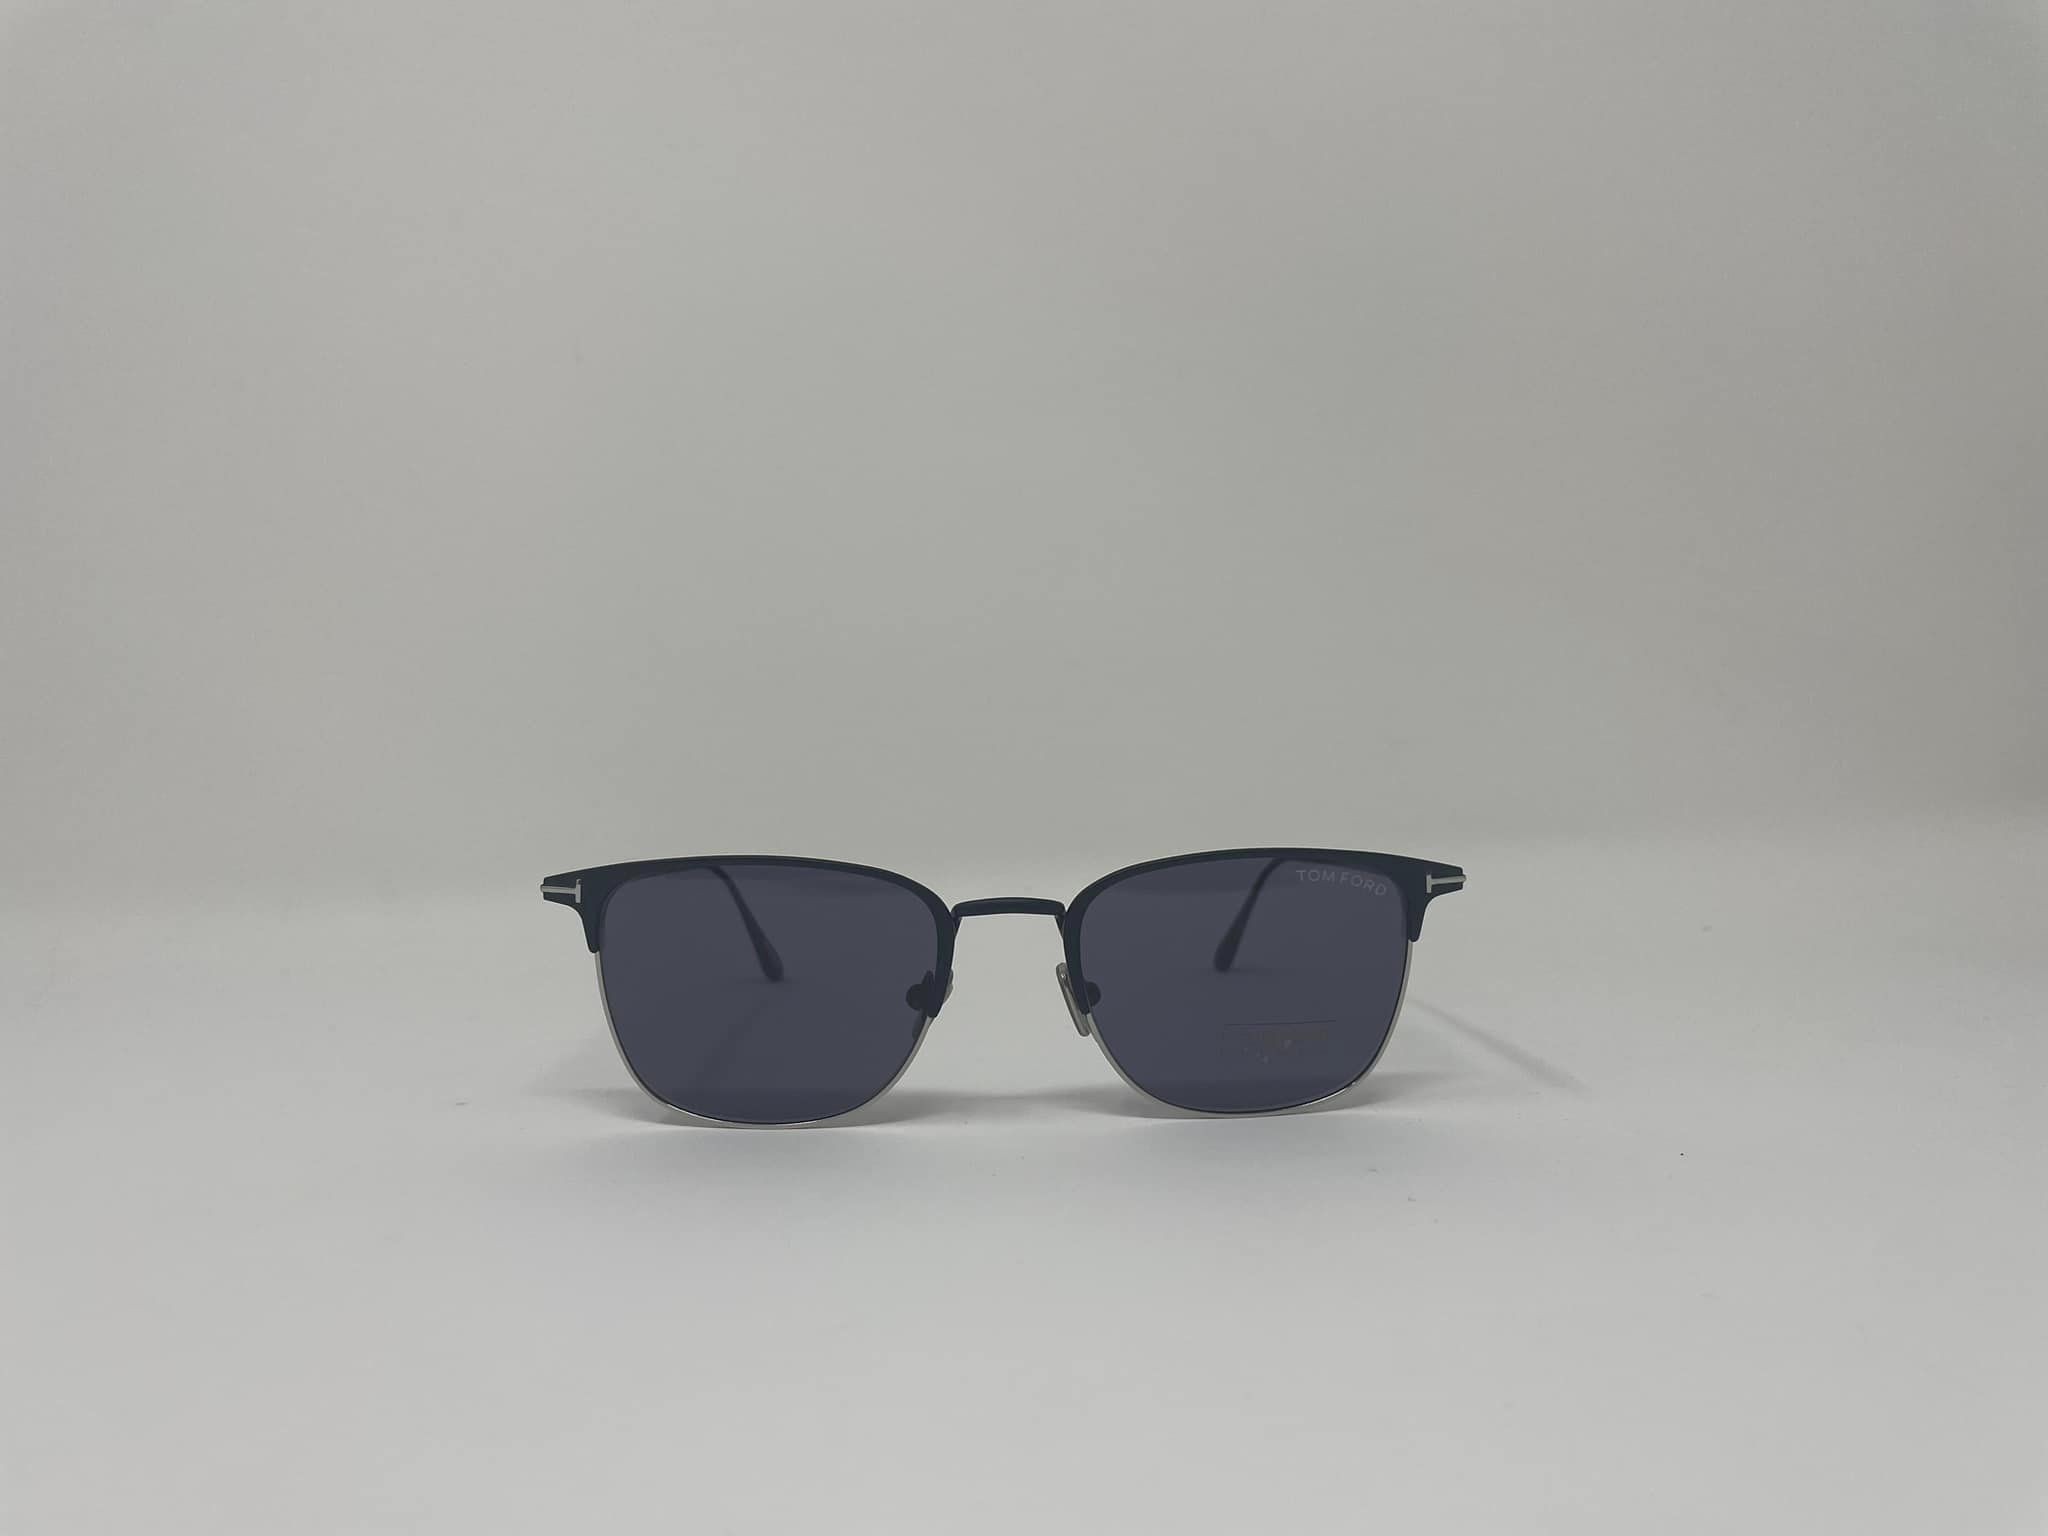 Tom Ford TF851 Men's sunglasses